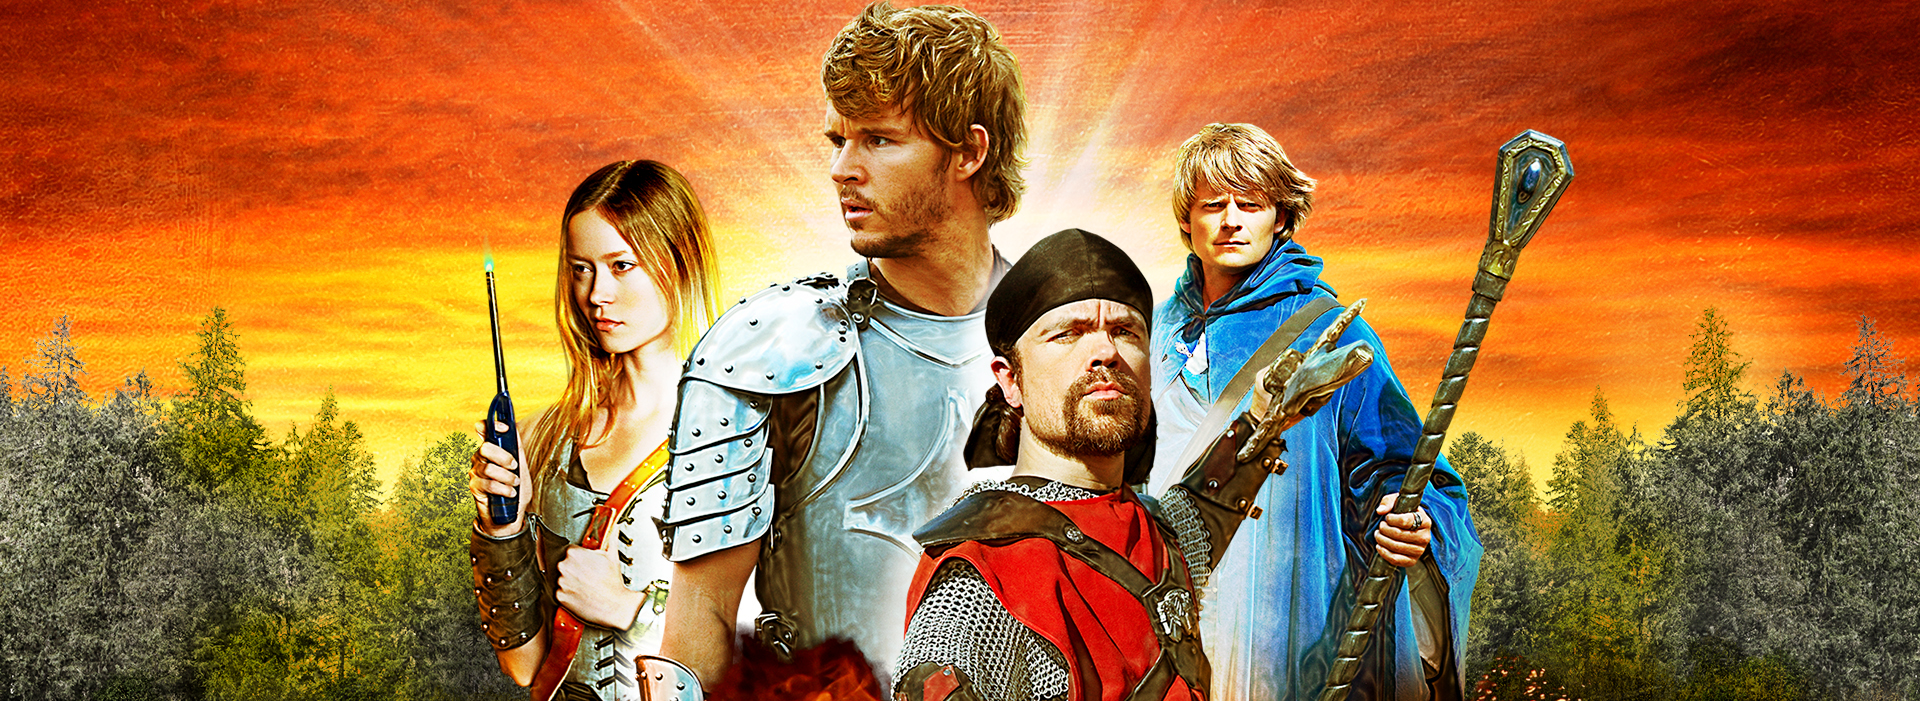 Movie poster Knights of Badassdom